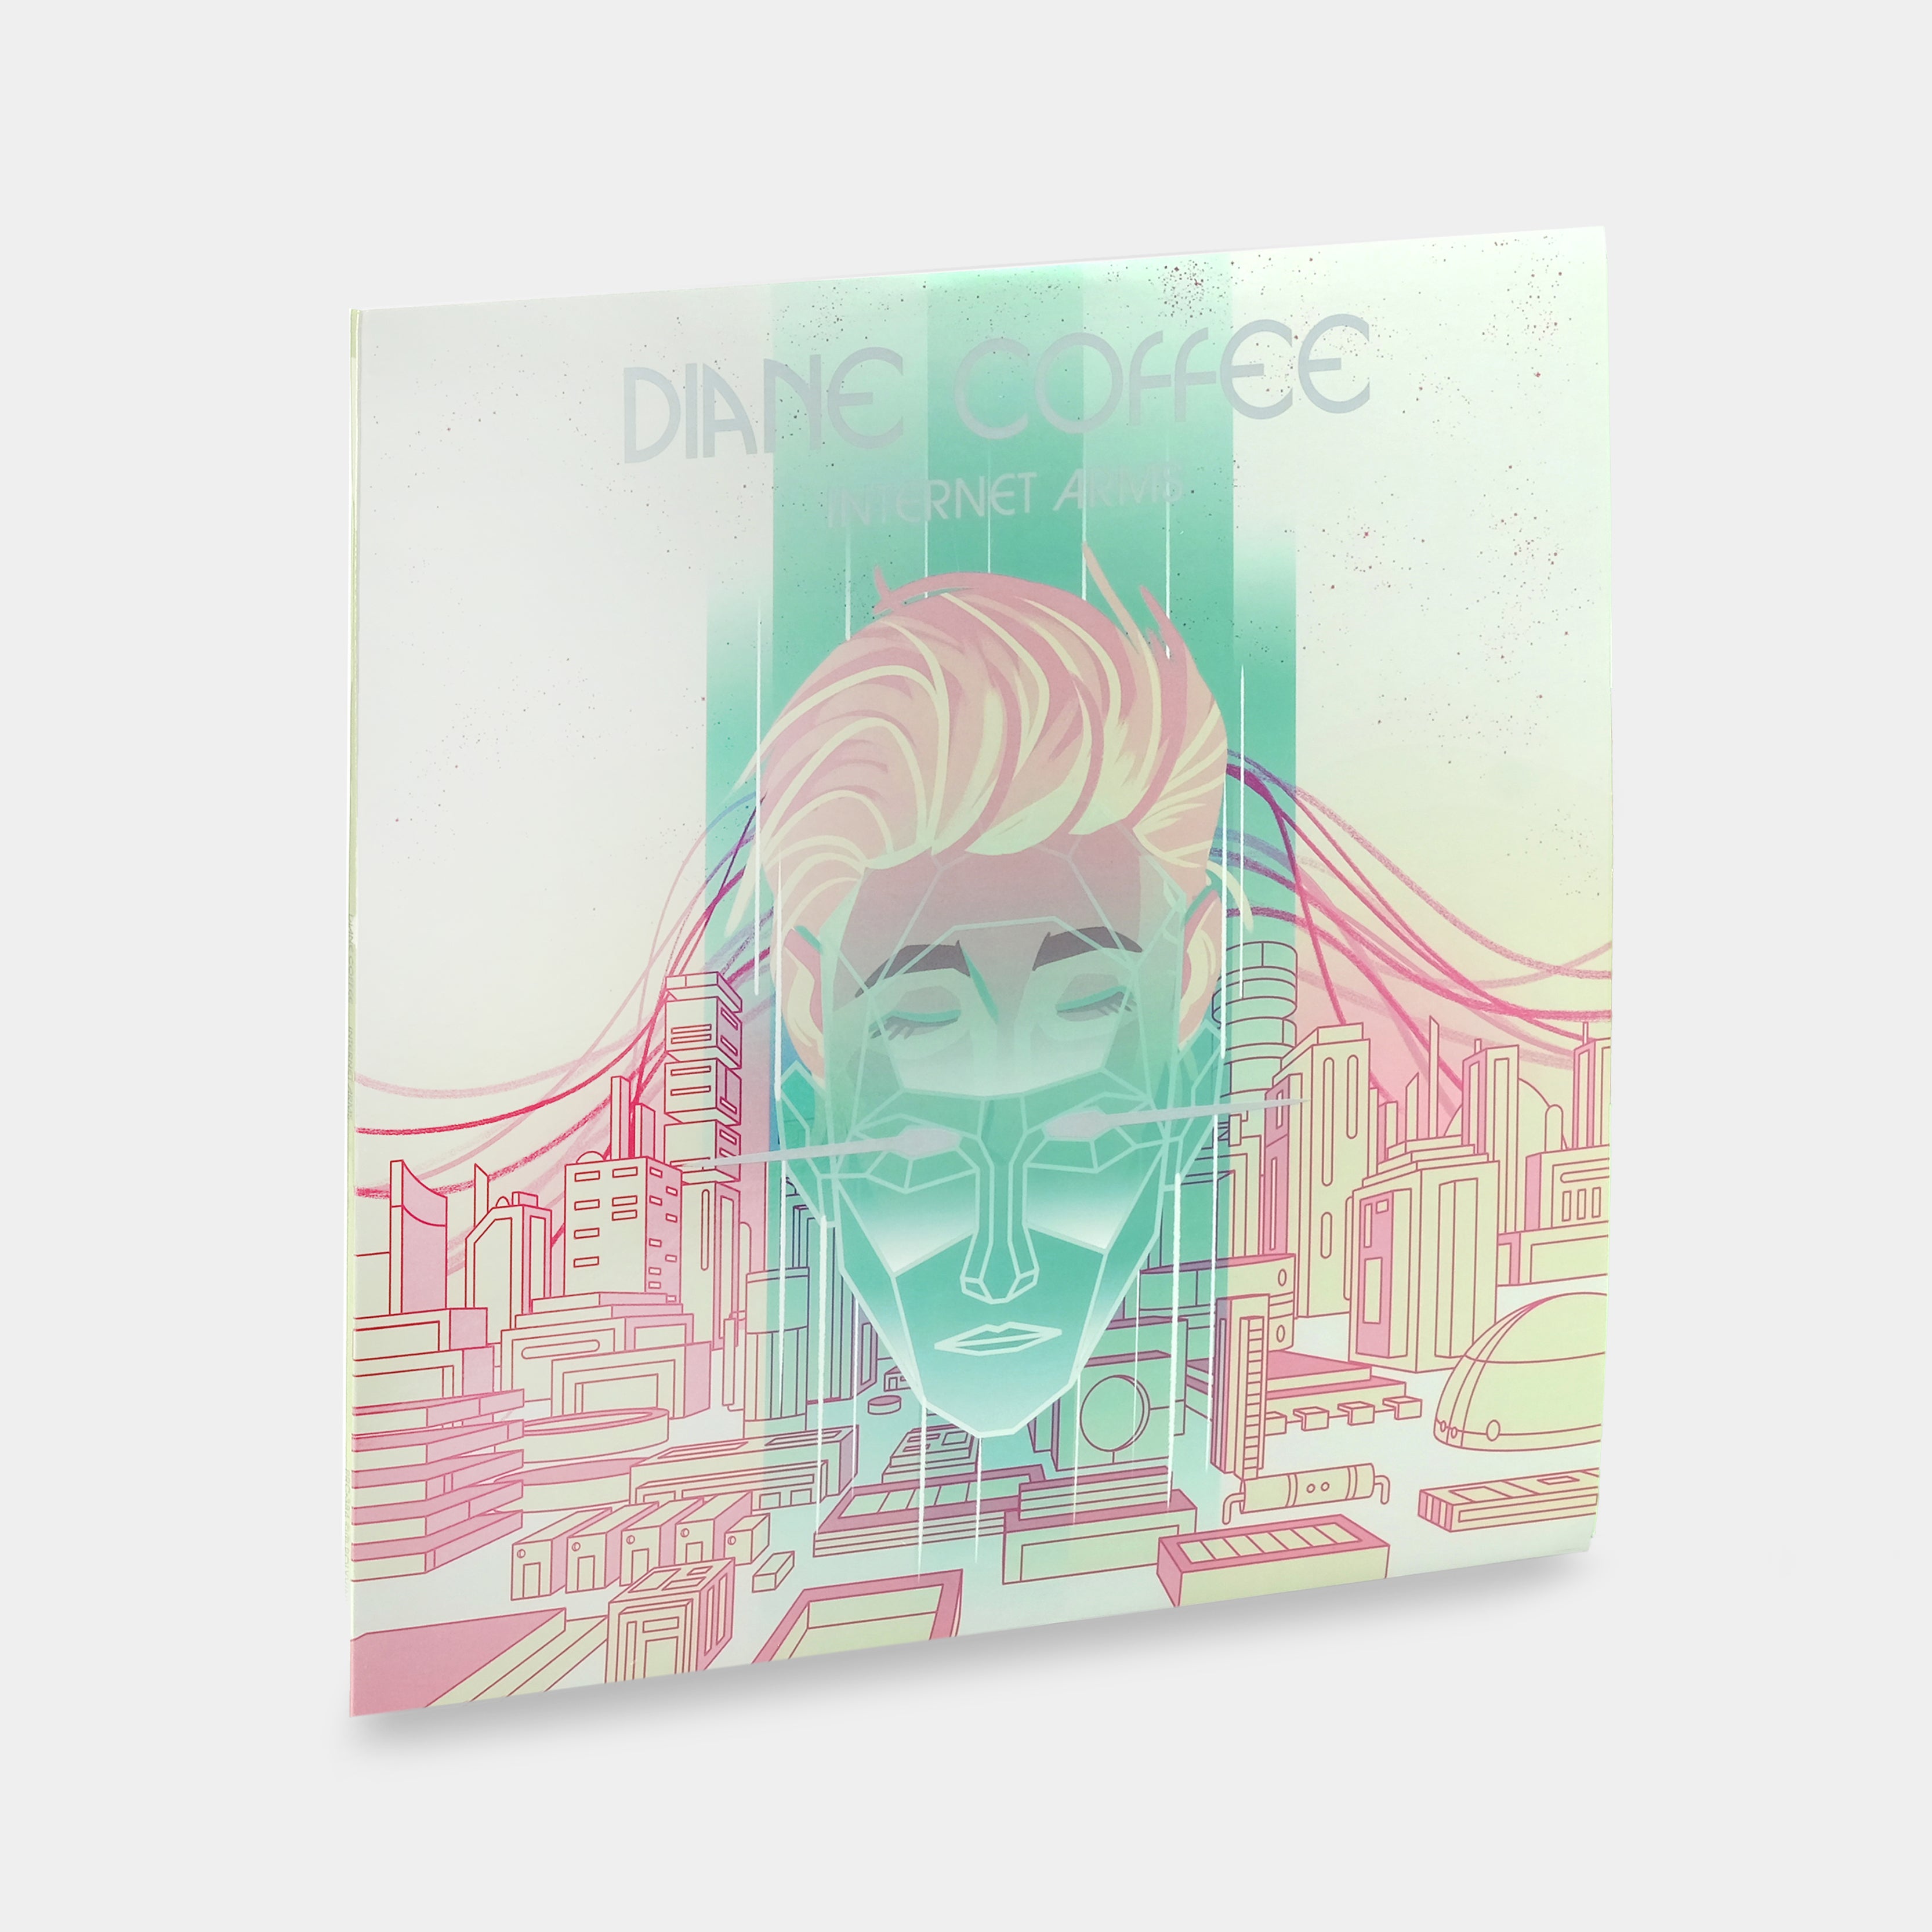 Diane Coffee - Internet Arms LP Clear Mint Green Vinyl Record